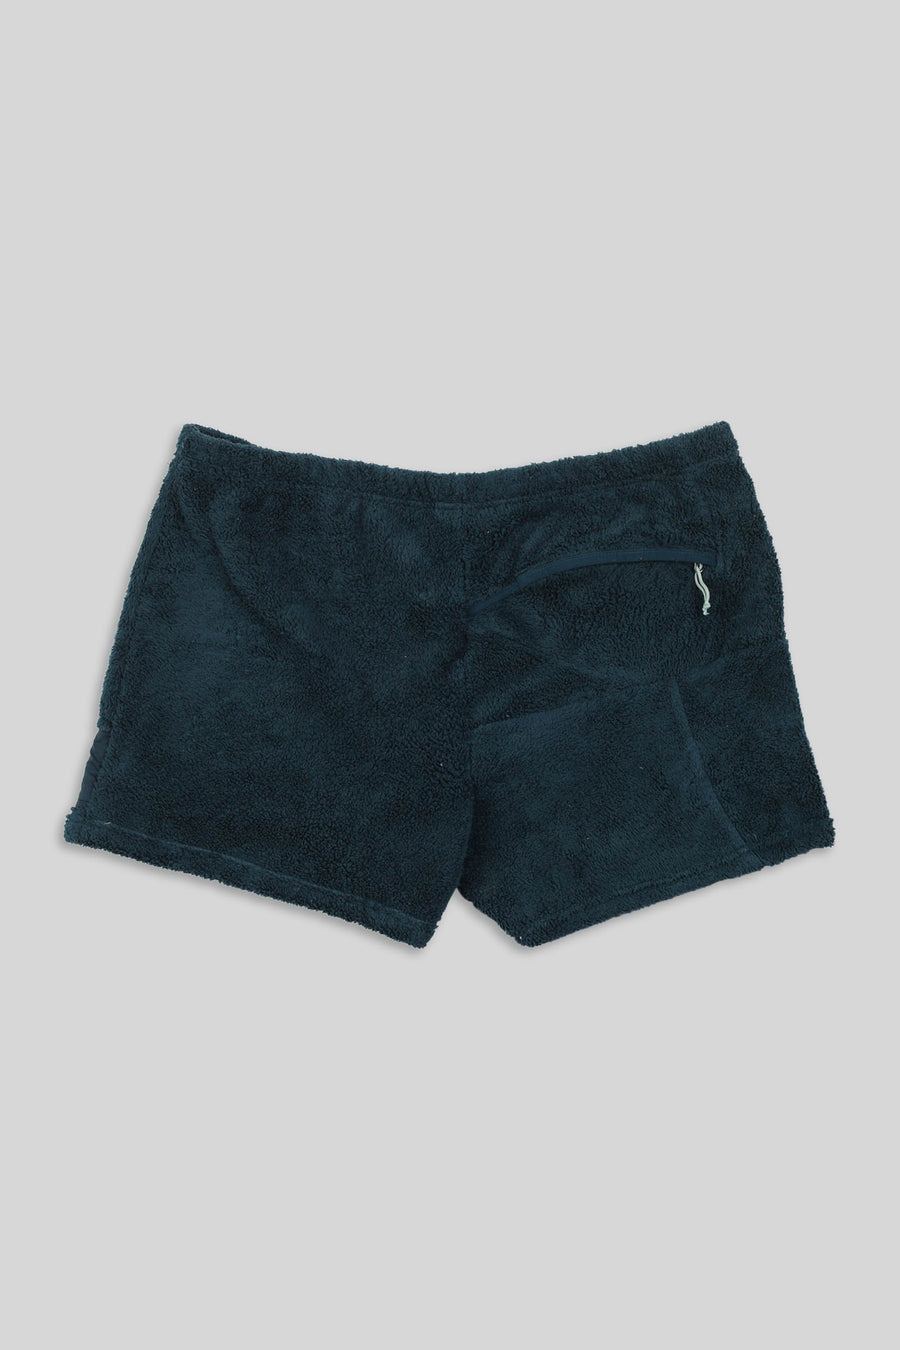 Rework North Face Fuzzy Shorts - 3XL